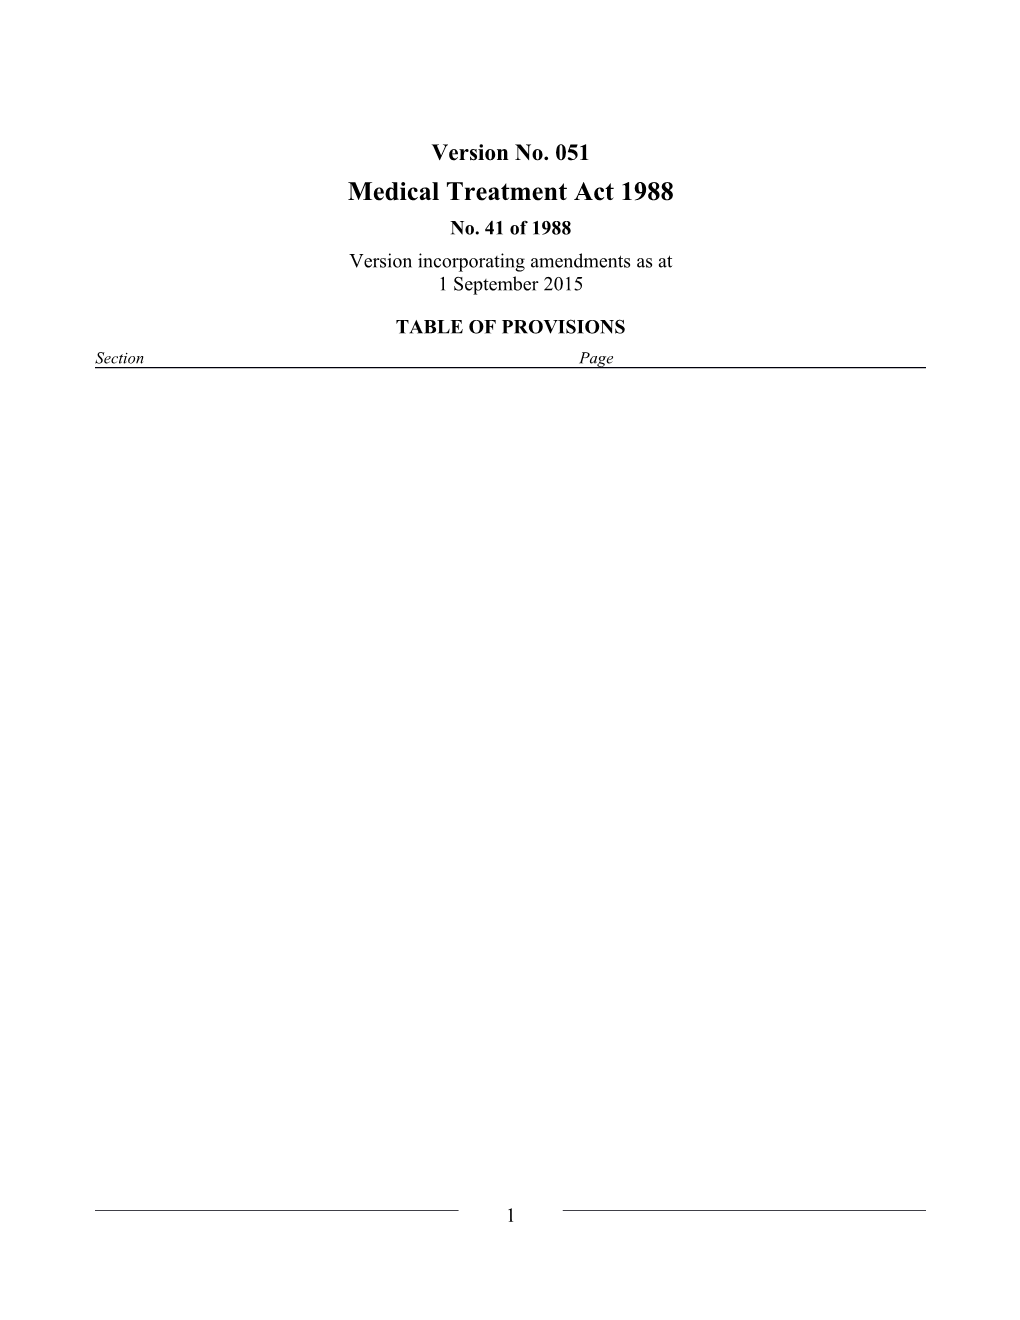 Medical Treatment Act 1988